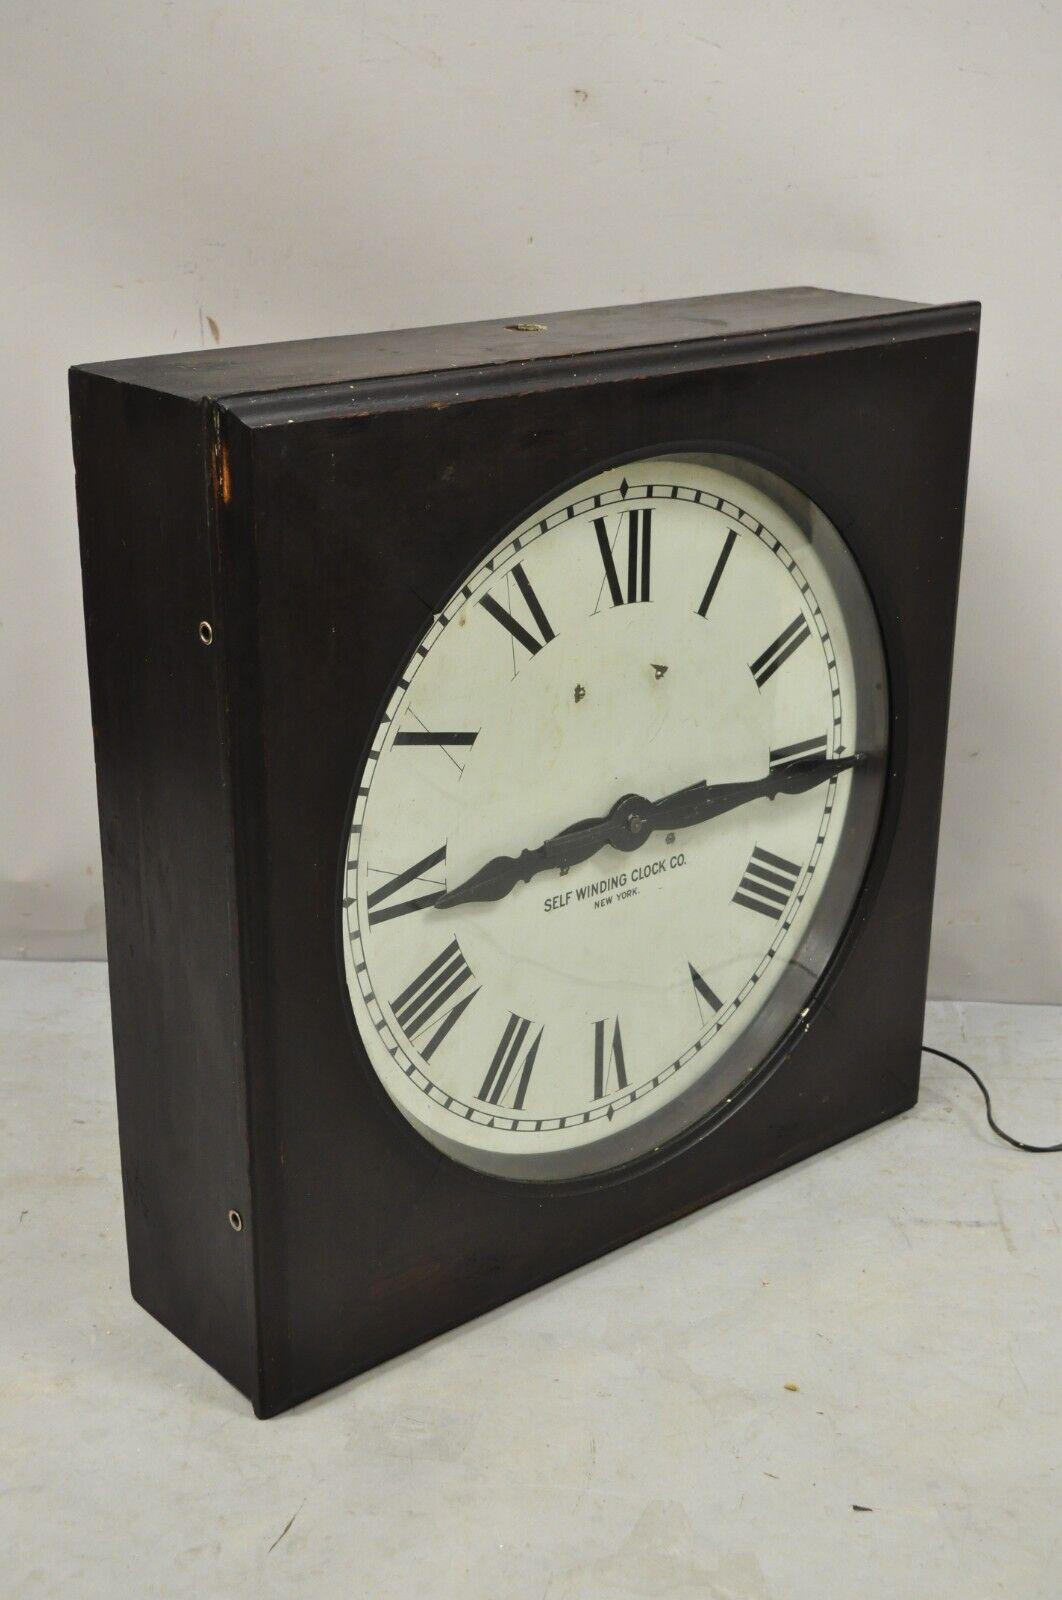 Vintage self winding clock co large 24